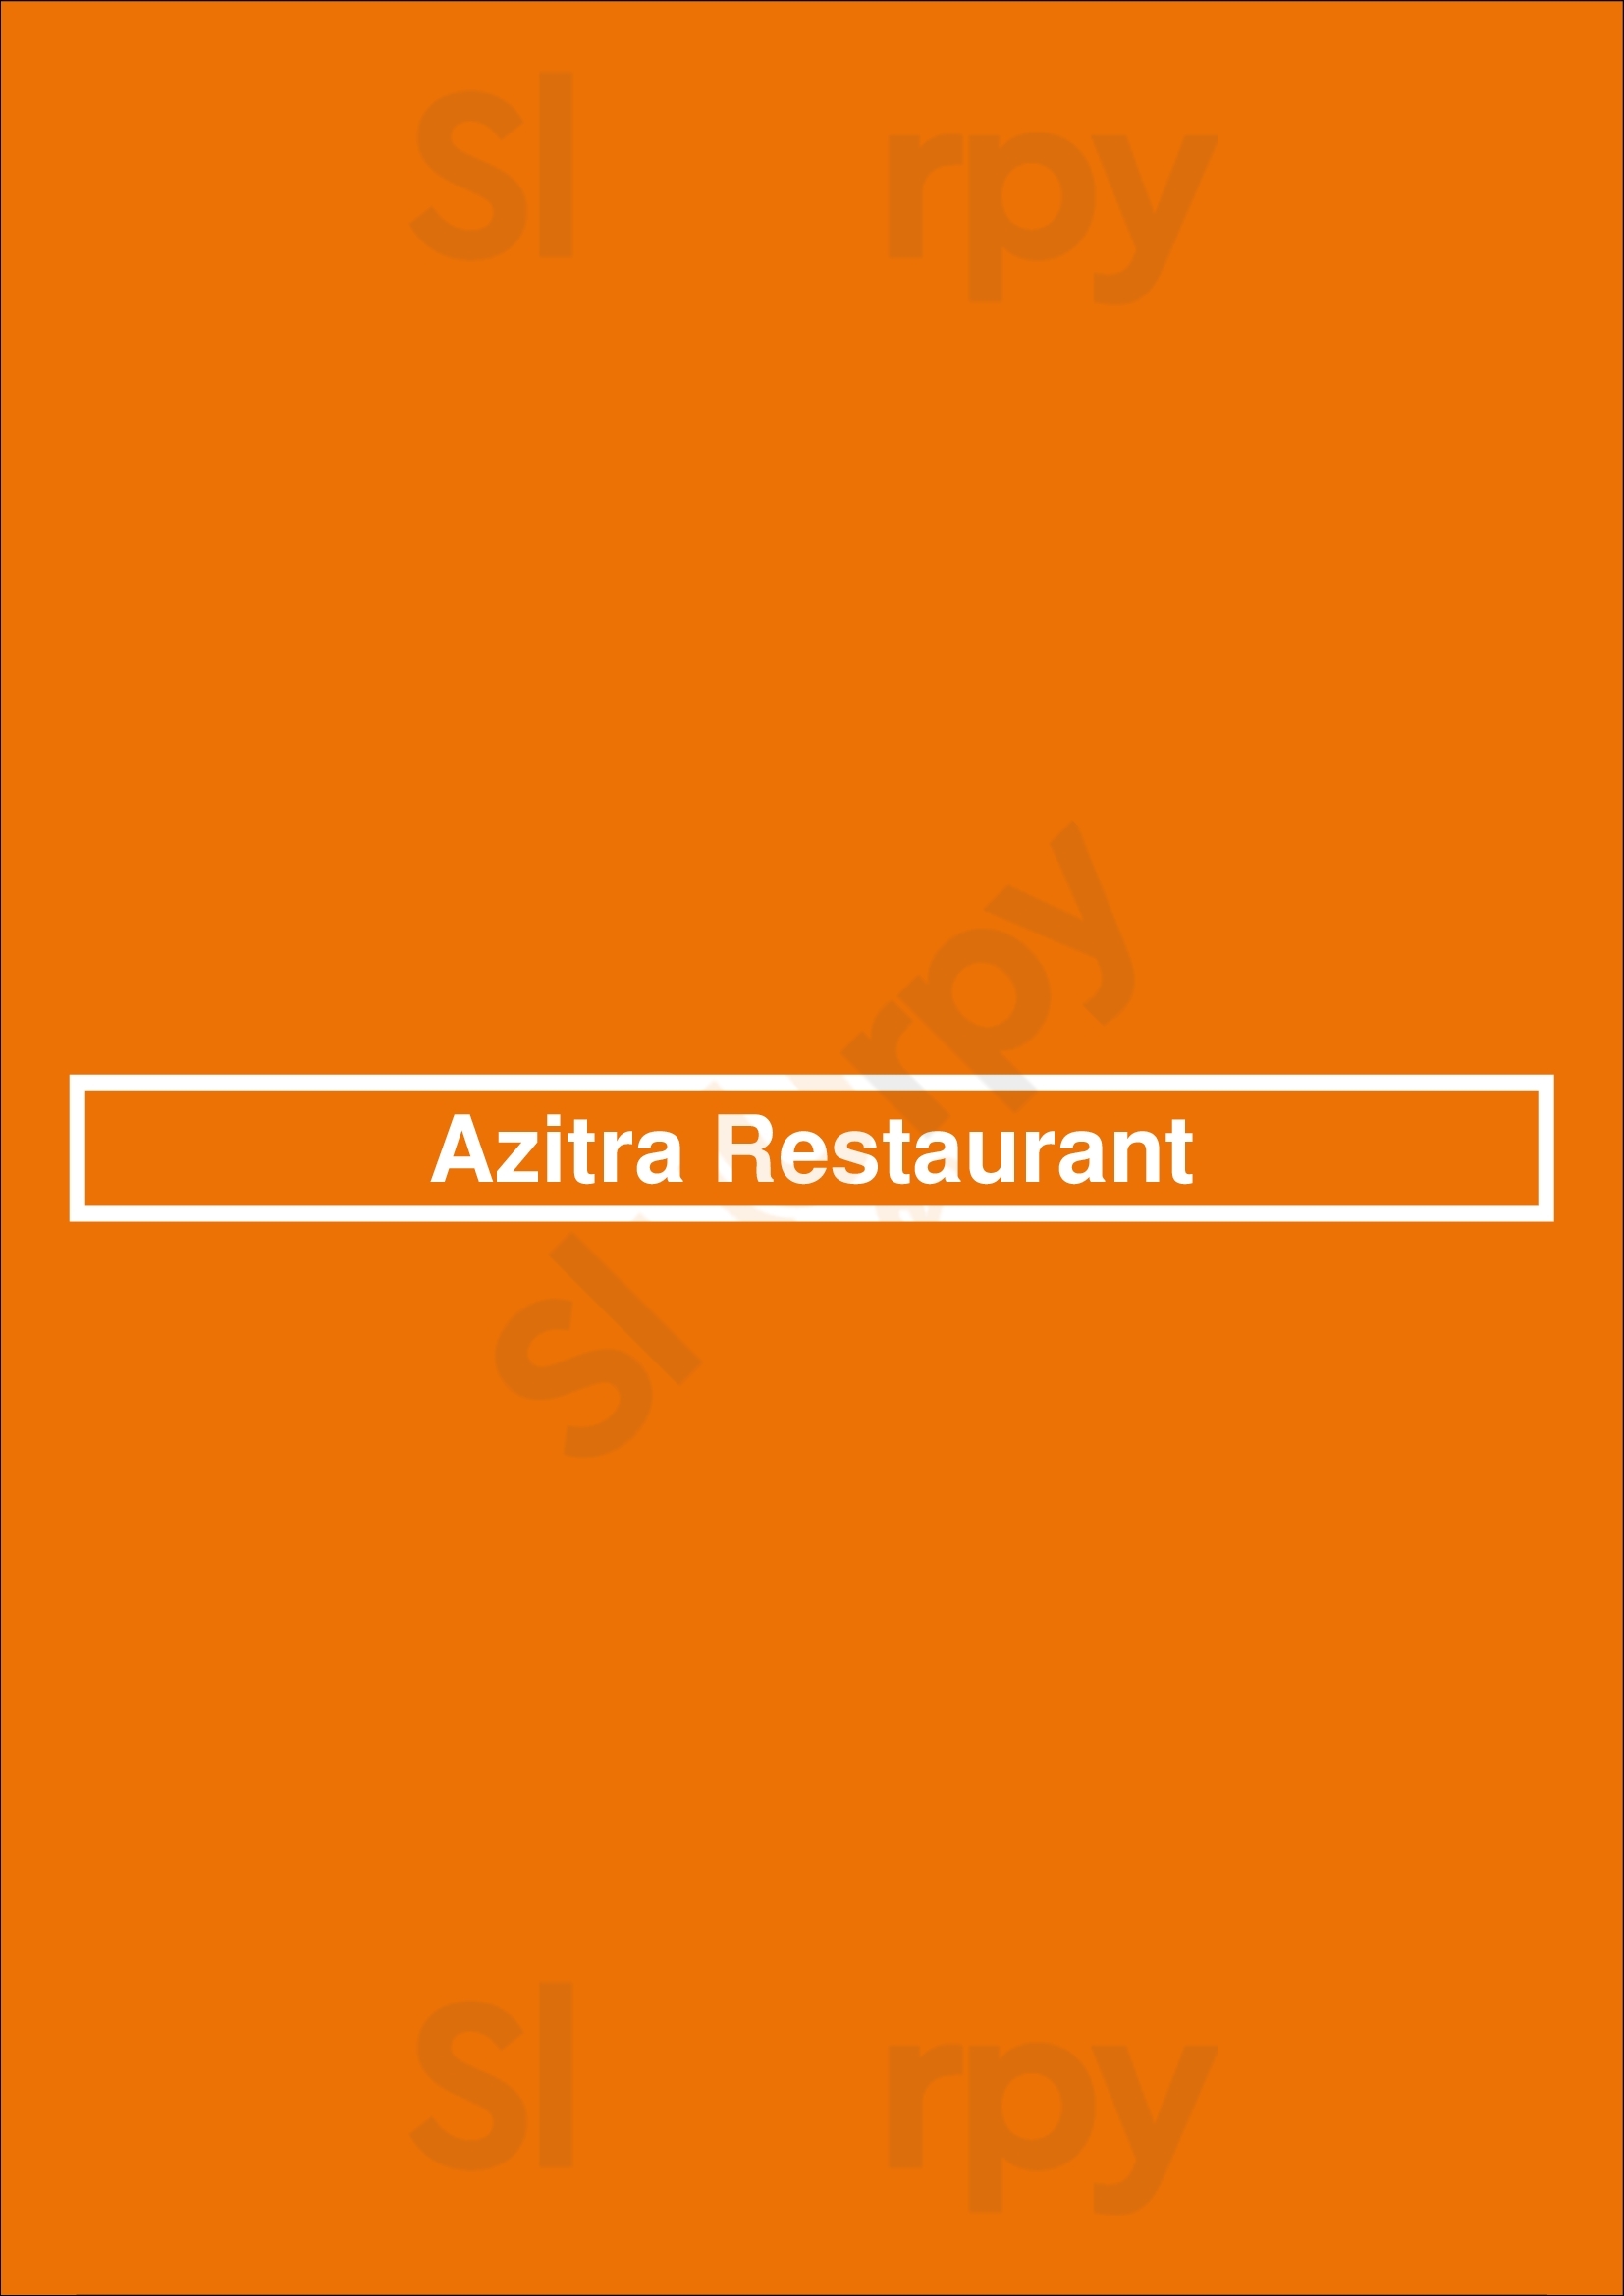 Azitra Restaurant Raleigh Menu - 1